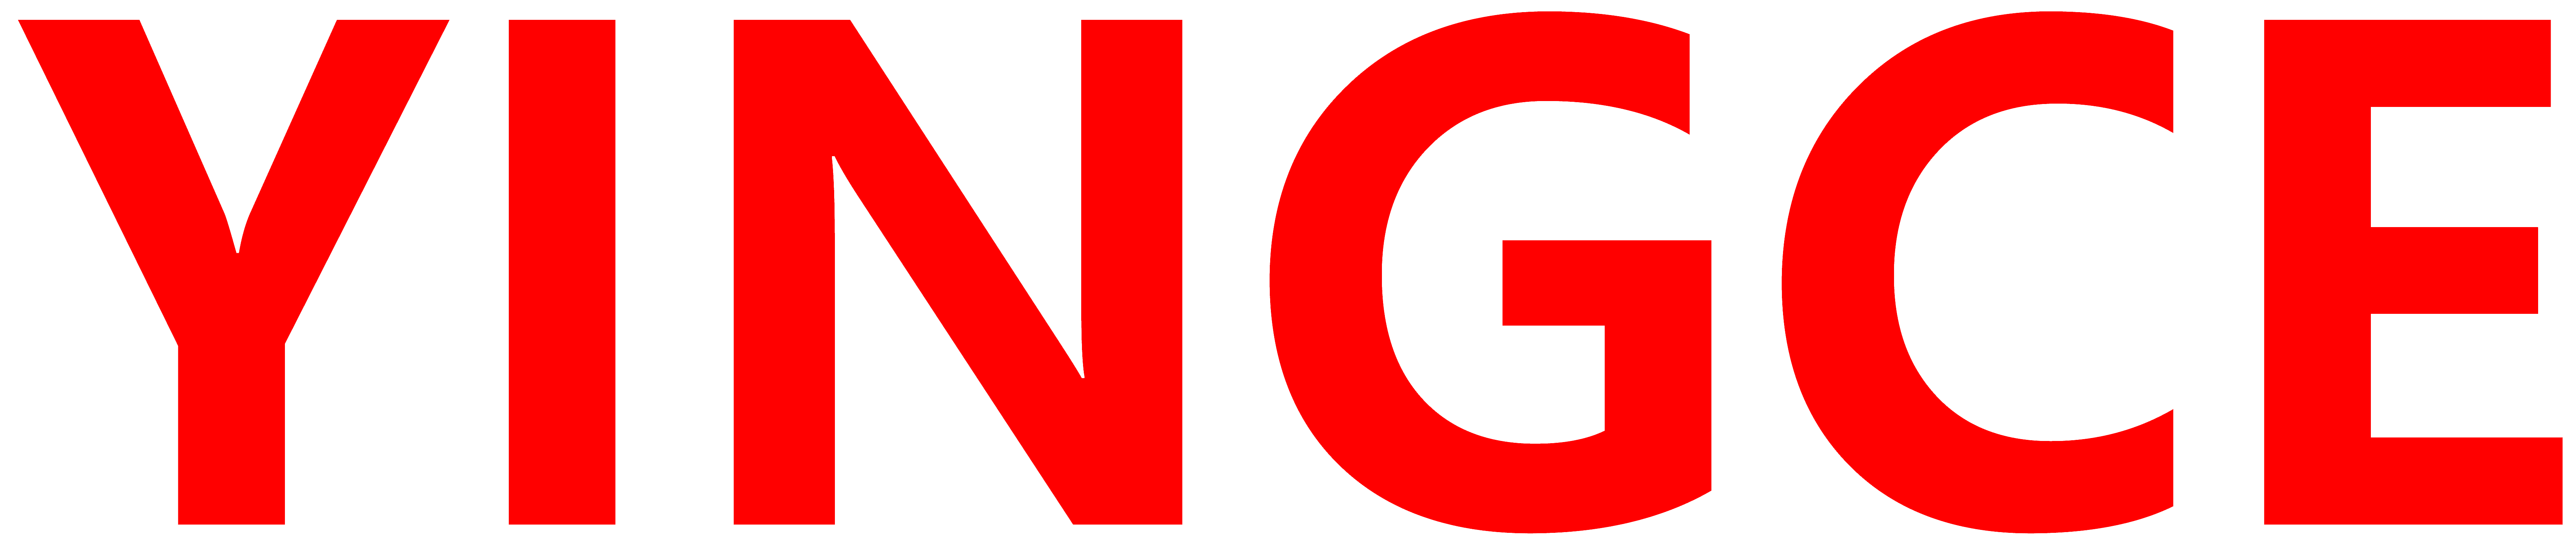 Shanghai Yingce Technologies Limited logo